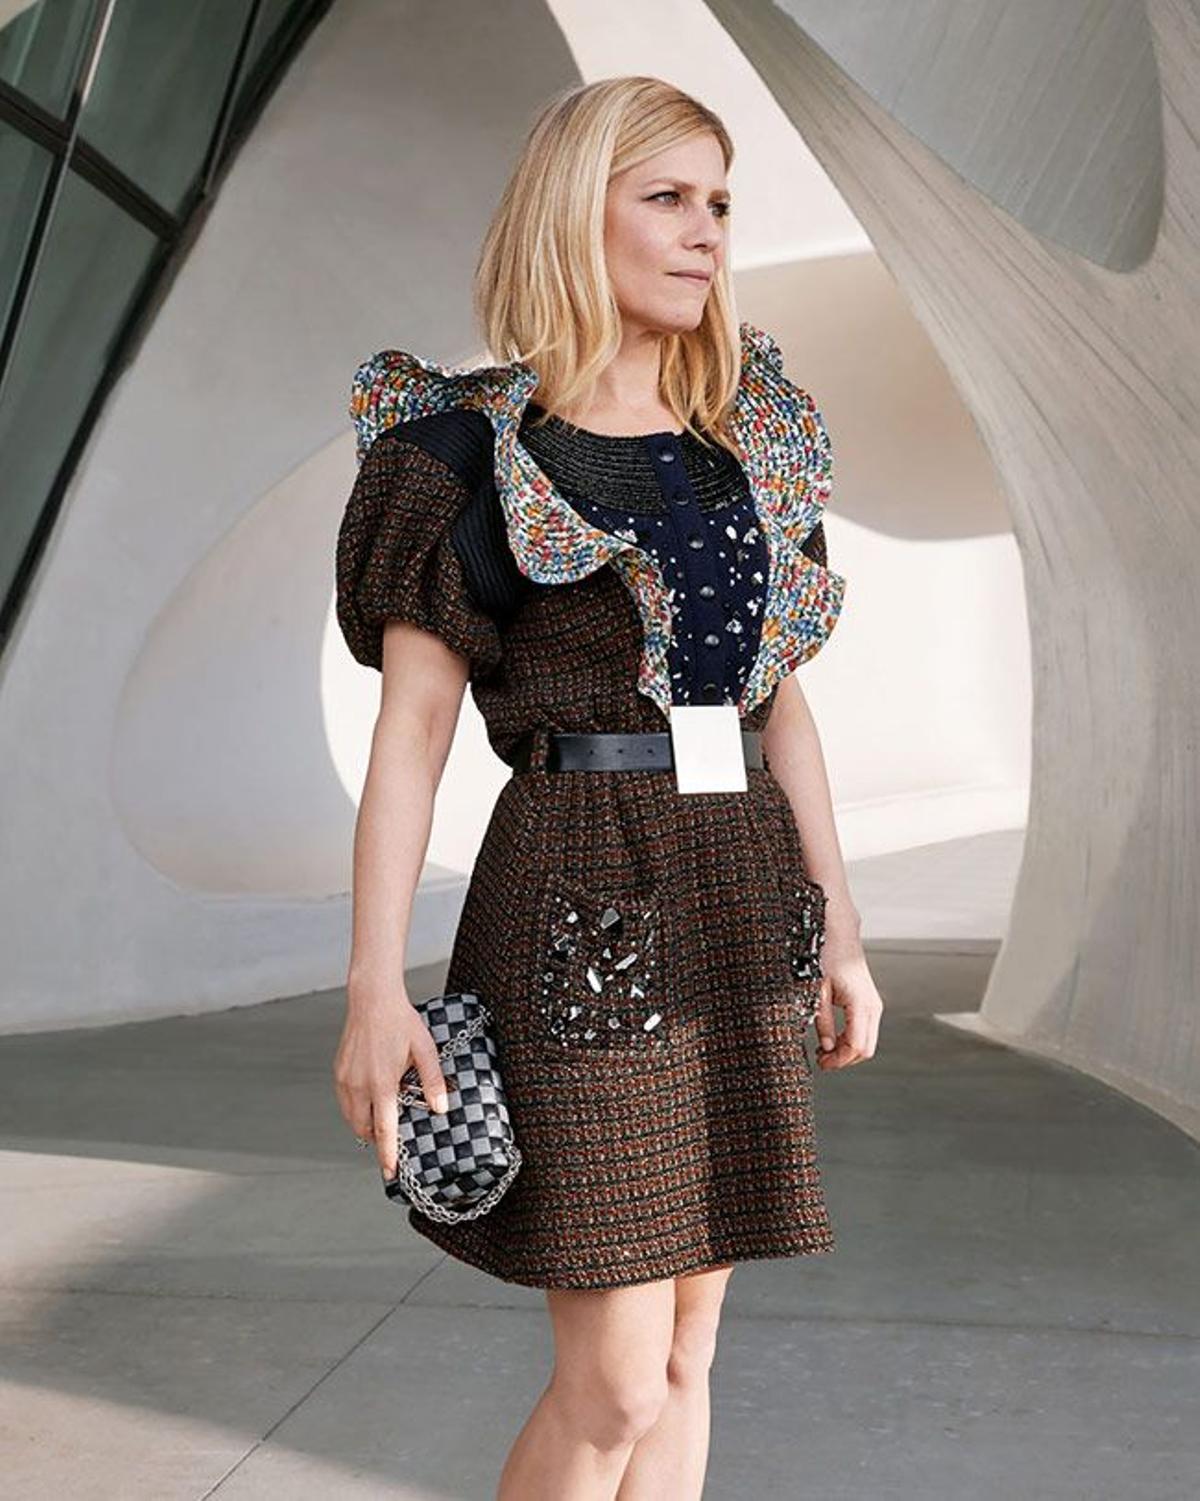 Los 6 bolsos de Louis Vuitton que vas a querer en tu armario - Woman